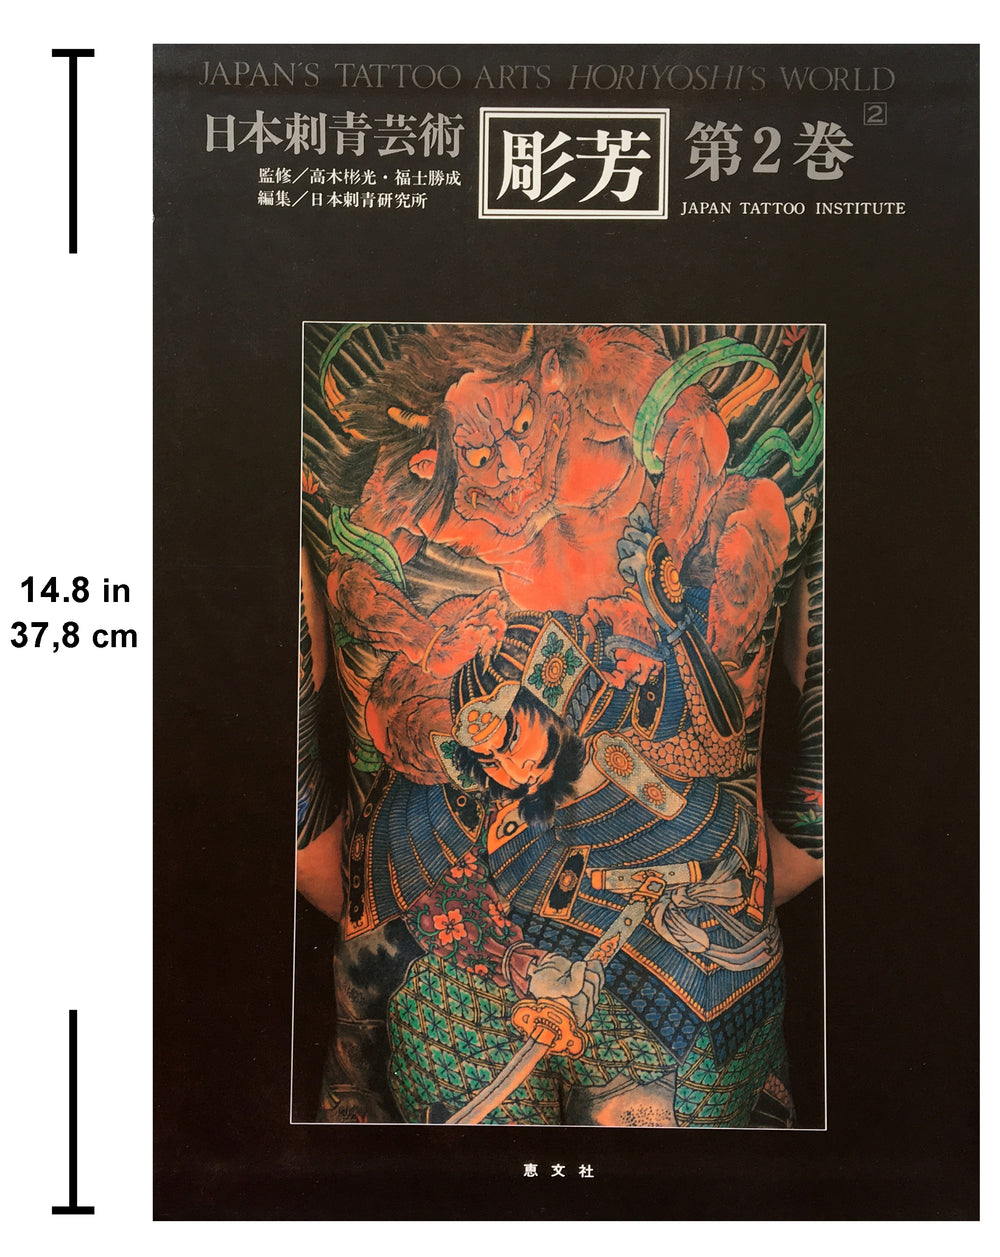 JAPAN’S TATTOO ARTS, HORIYOSHI’S WORLD / VOL.2 (First Edition 1987)